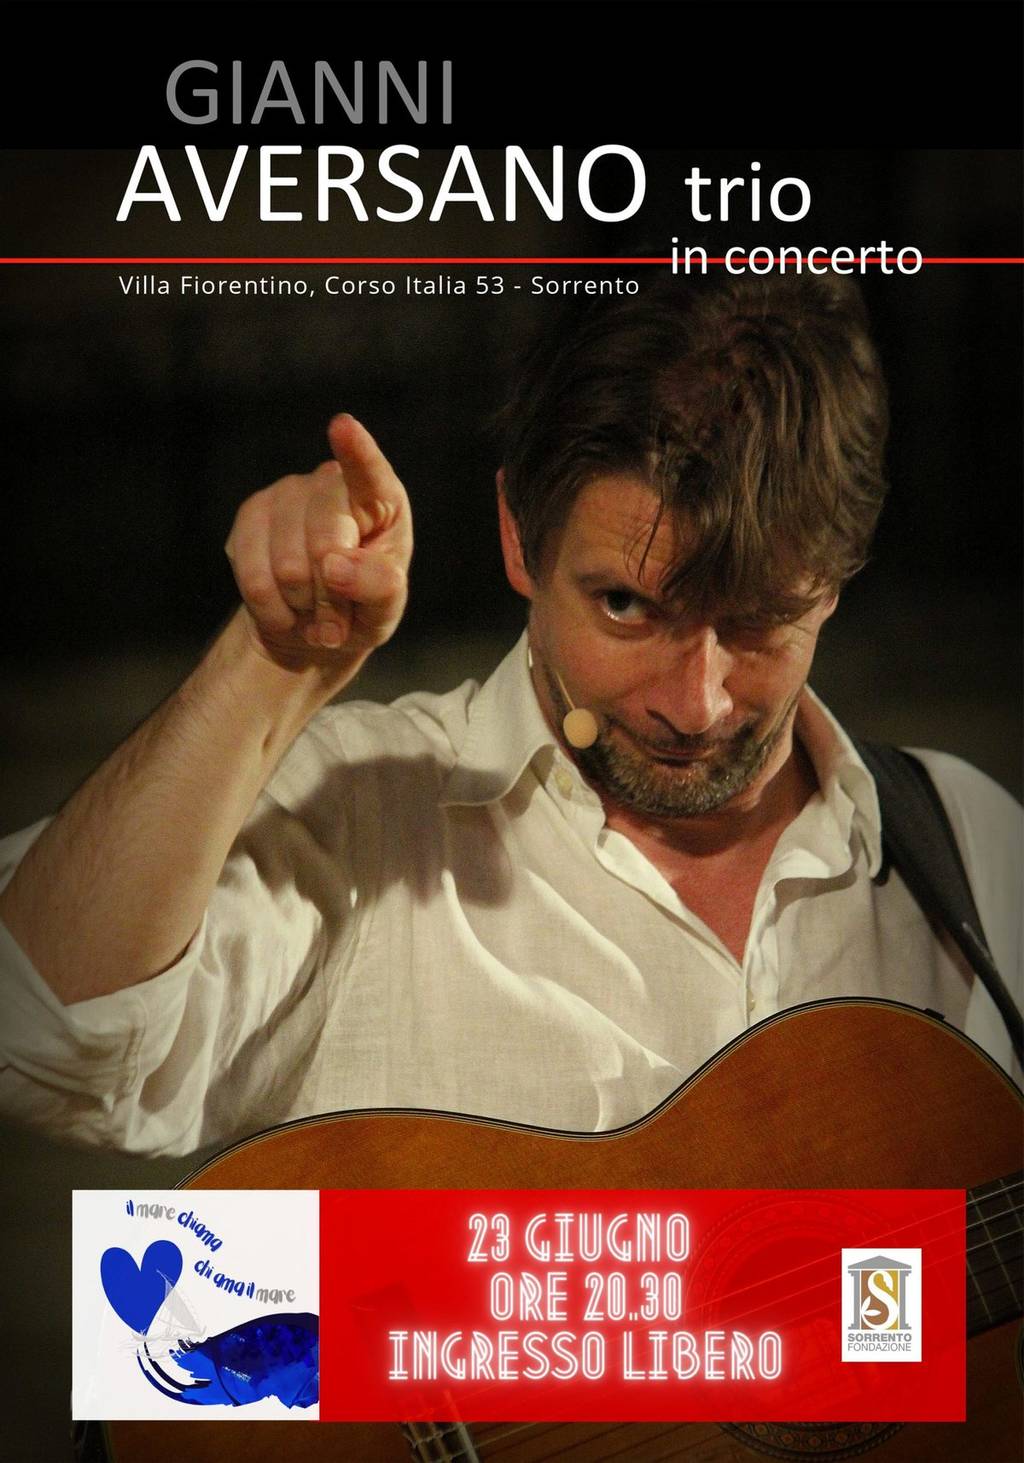 Concert Gianni Aversano